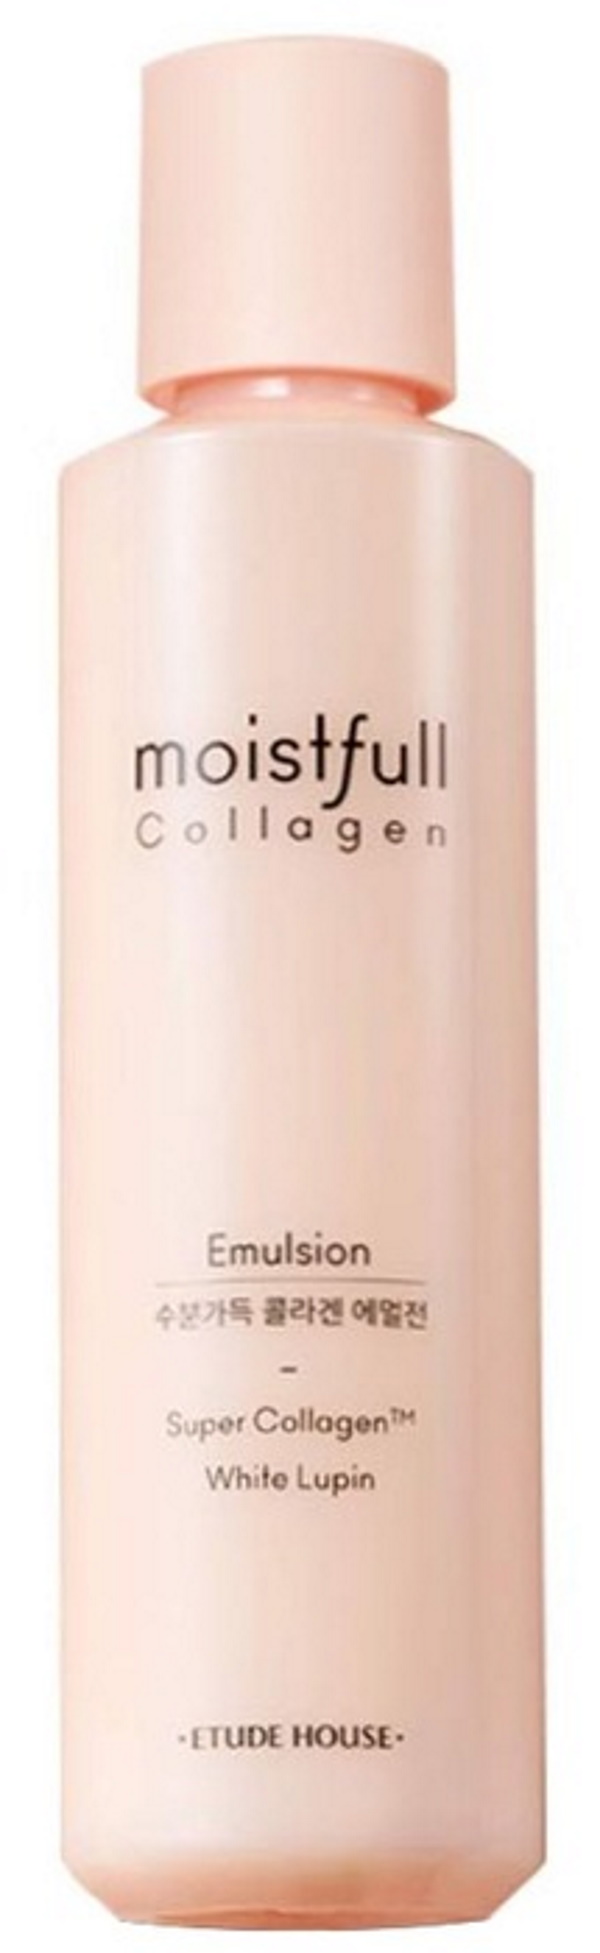 Эмульсия для лица ETUDE HOUSE Moistfull collagen emulsion увлажняющая с коллагеном 180 мл